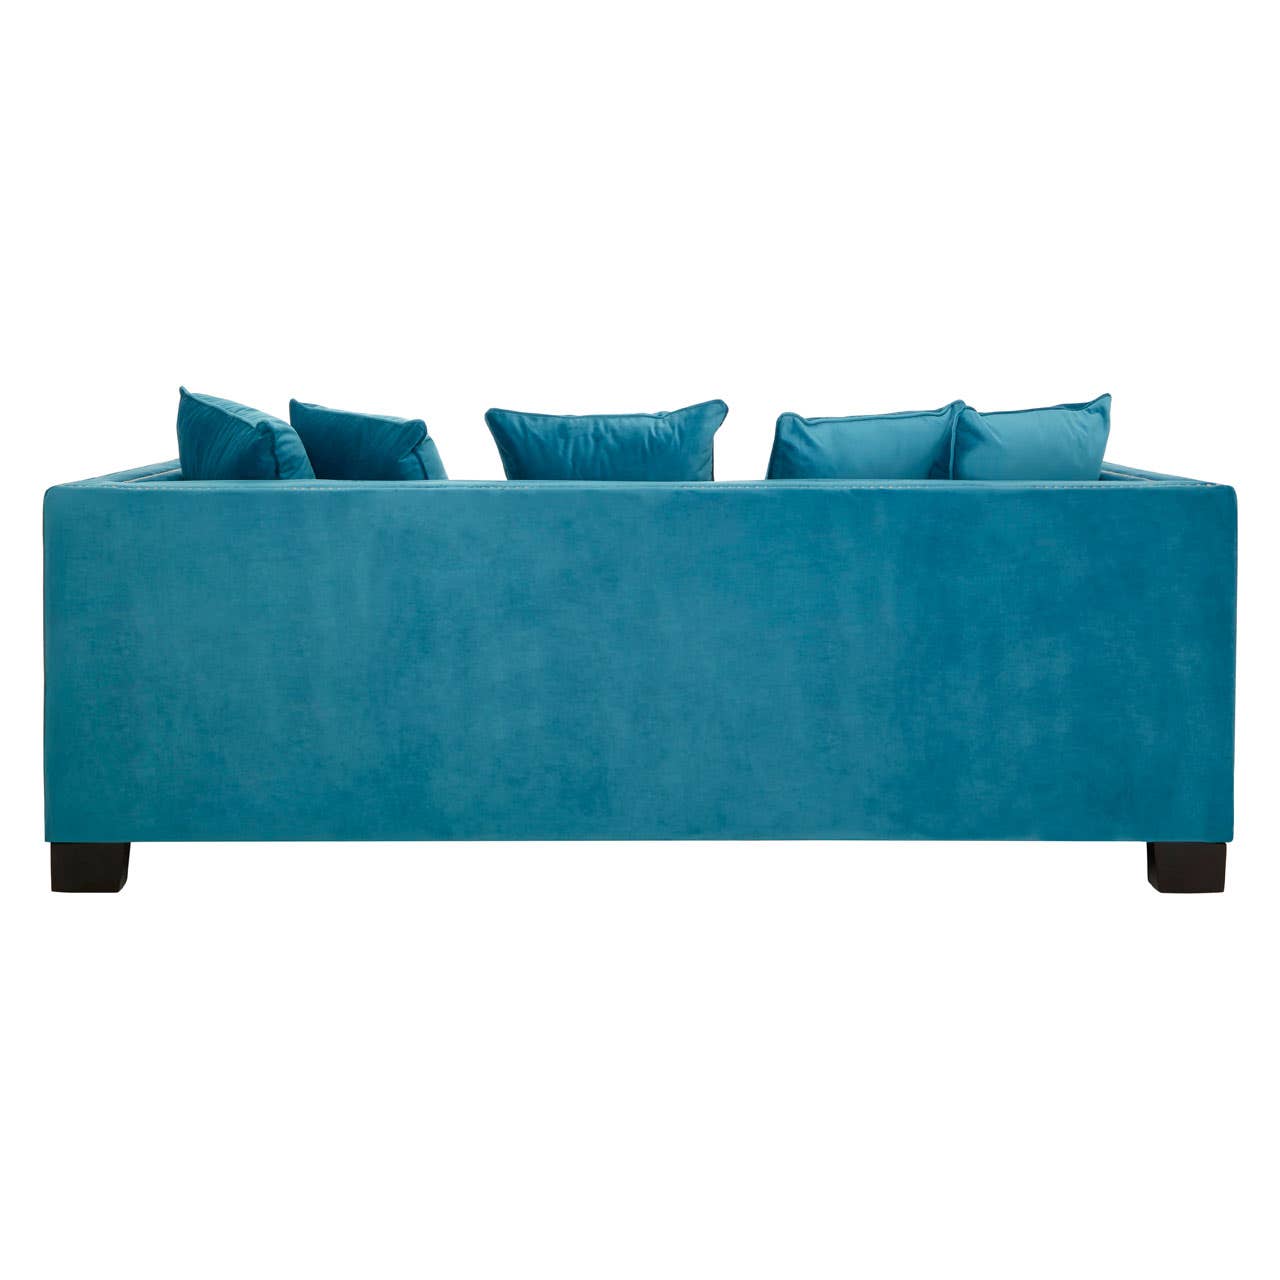 Sofia 3 Seater Cyan Blue Velvet Sofa